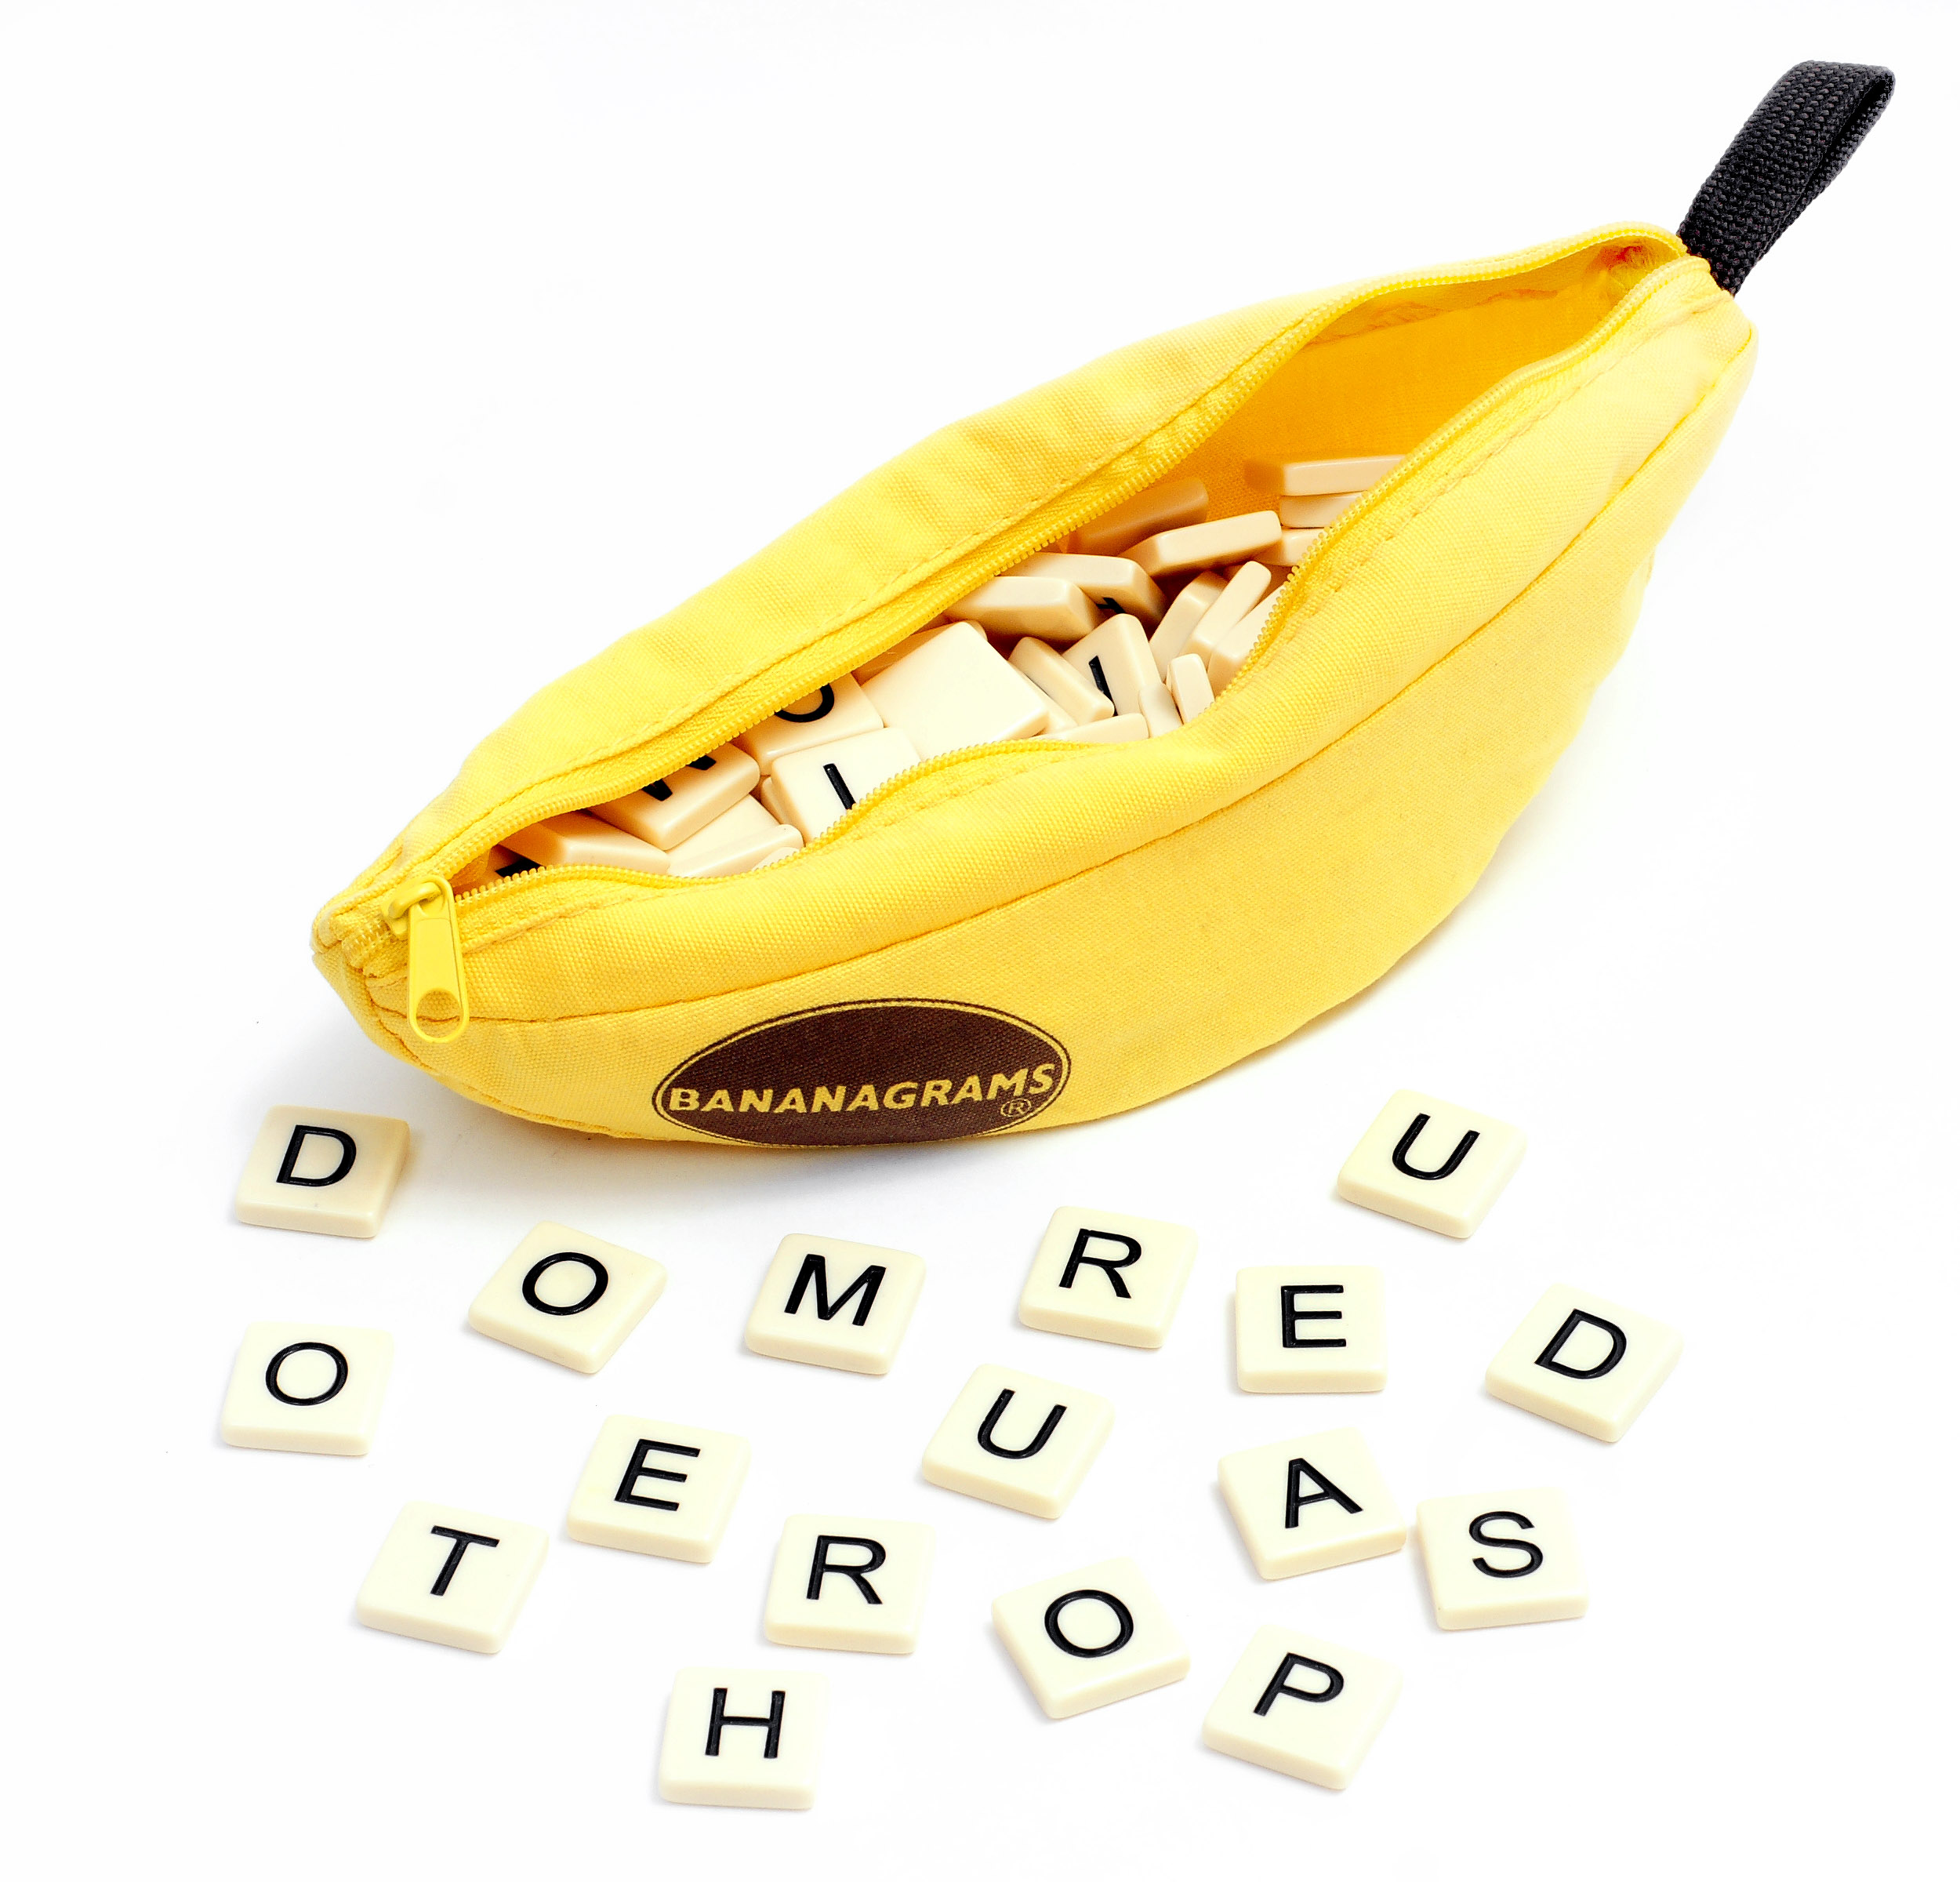 File:Bananagrams-game.jpg - Wikipedia, the free encyclopedia